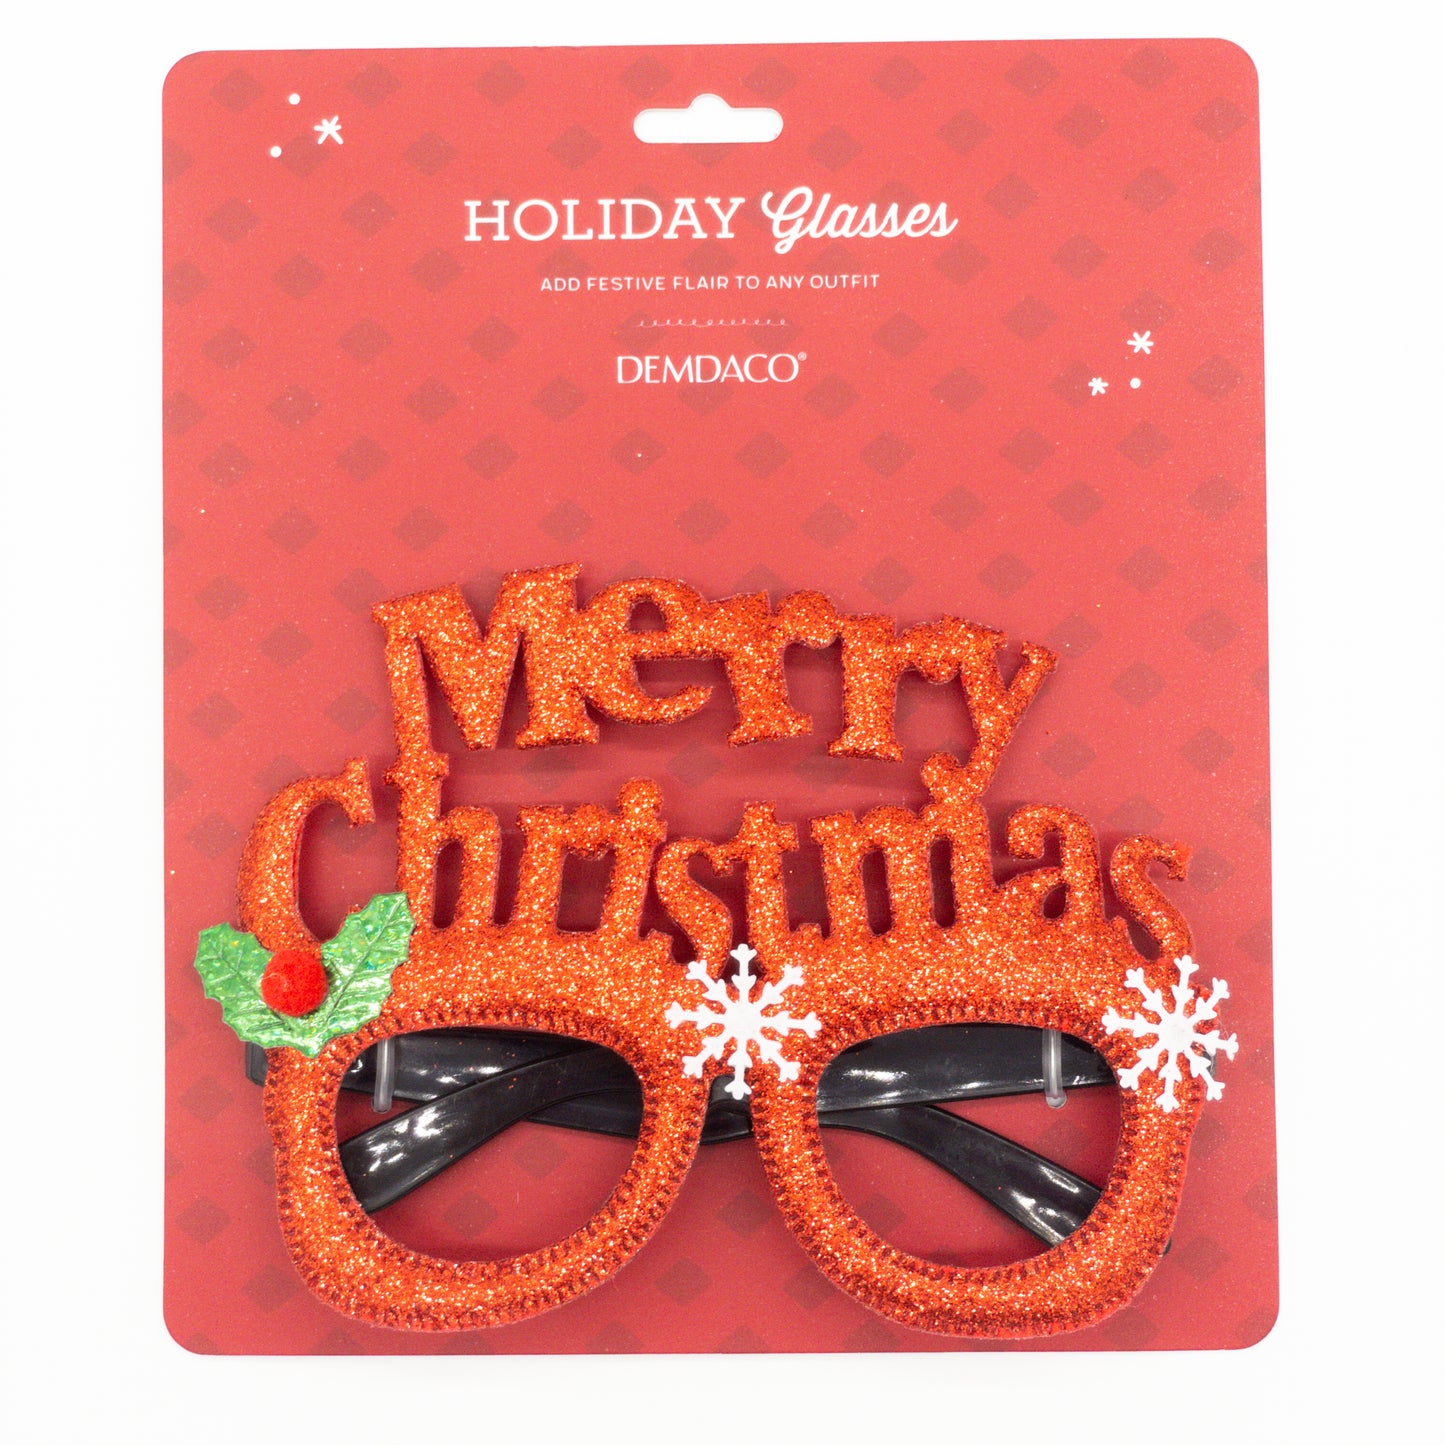 Merry Christmas Eyeglasses